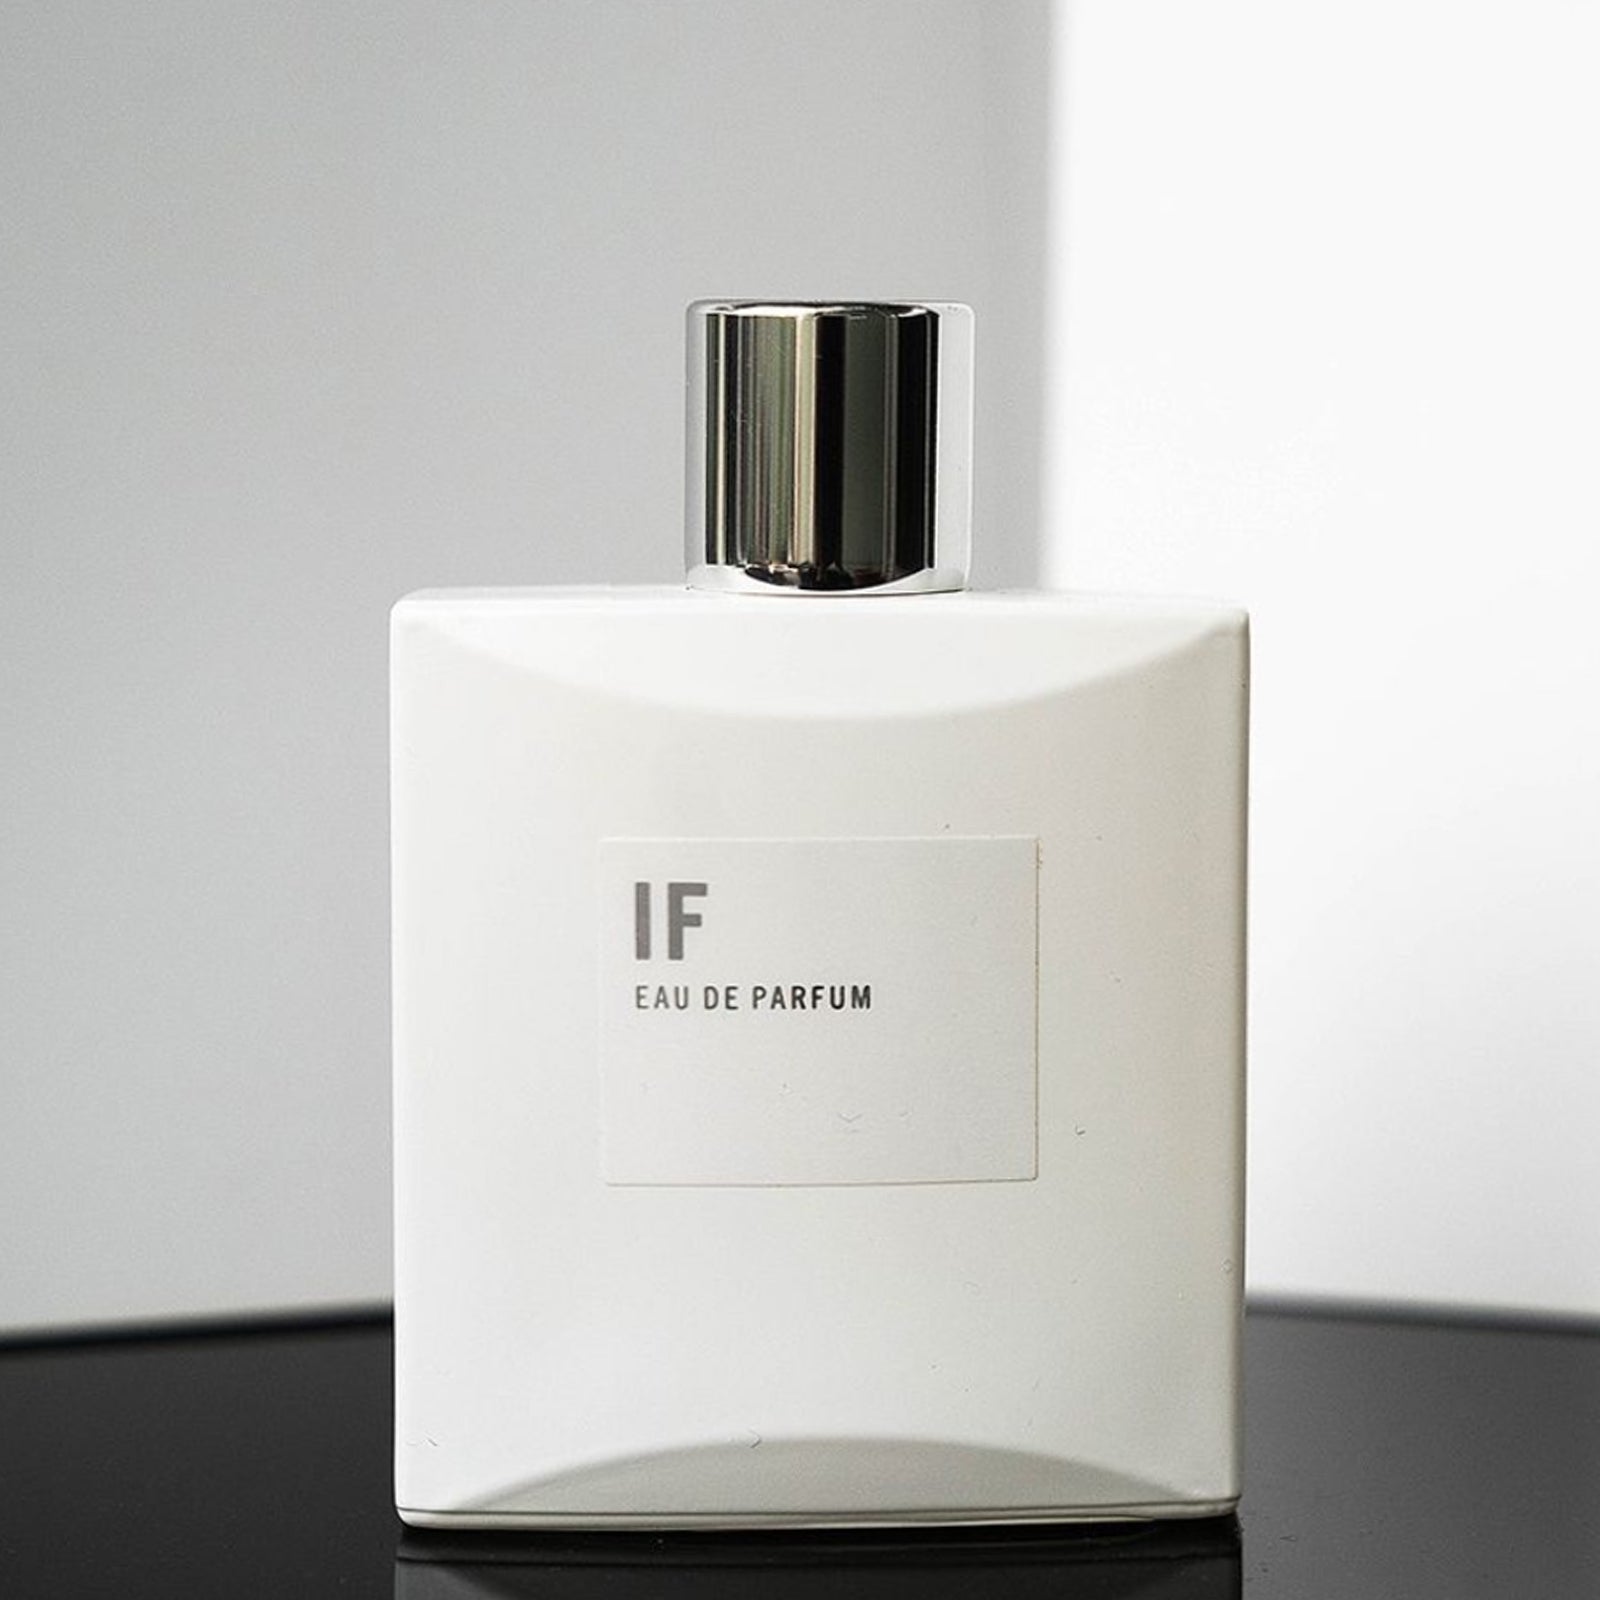 APOTHIA / IF eau de parfum 50ml